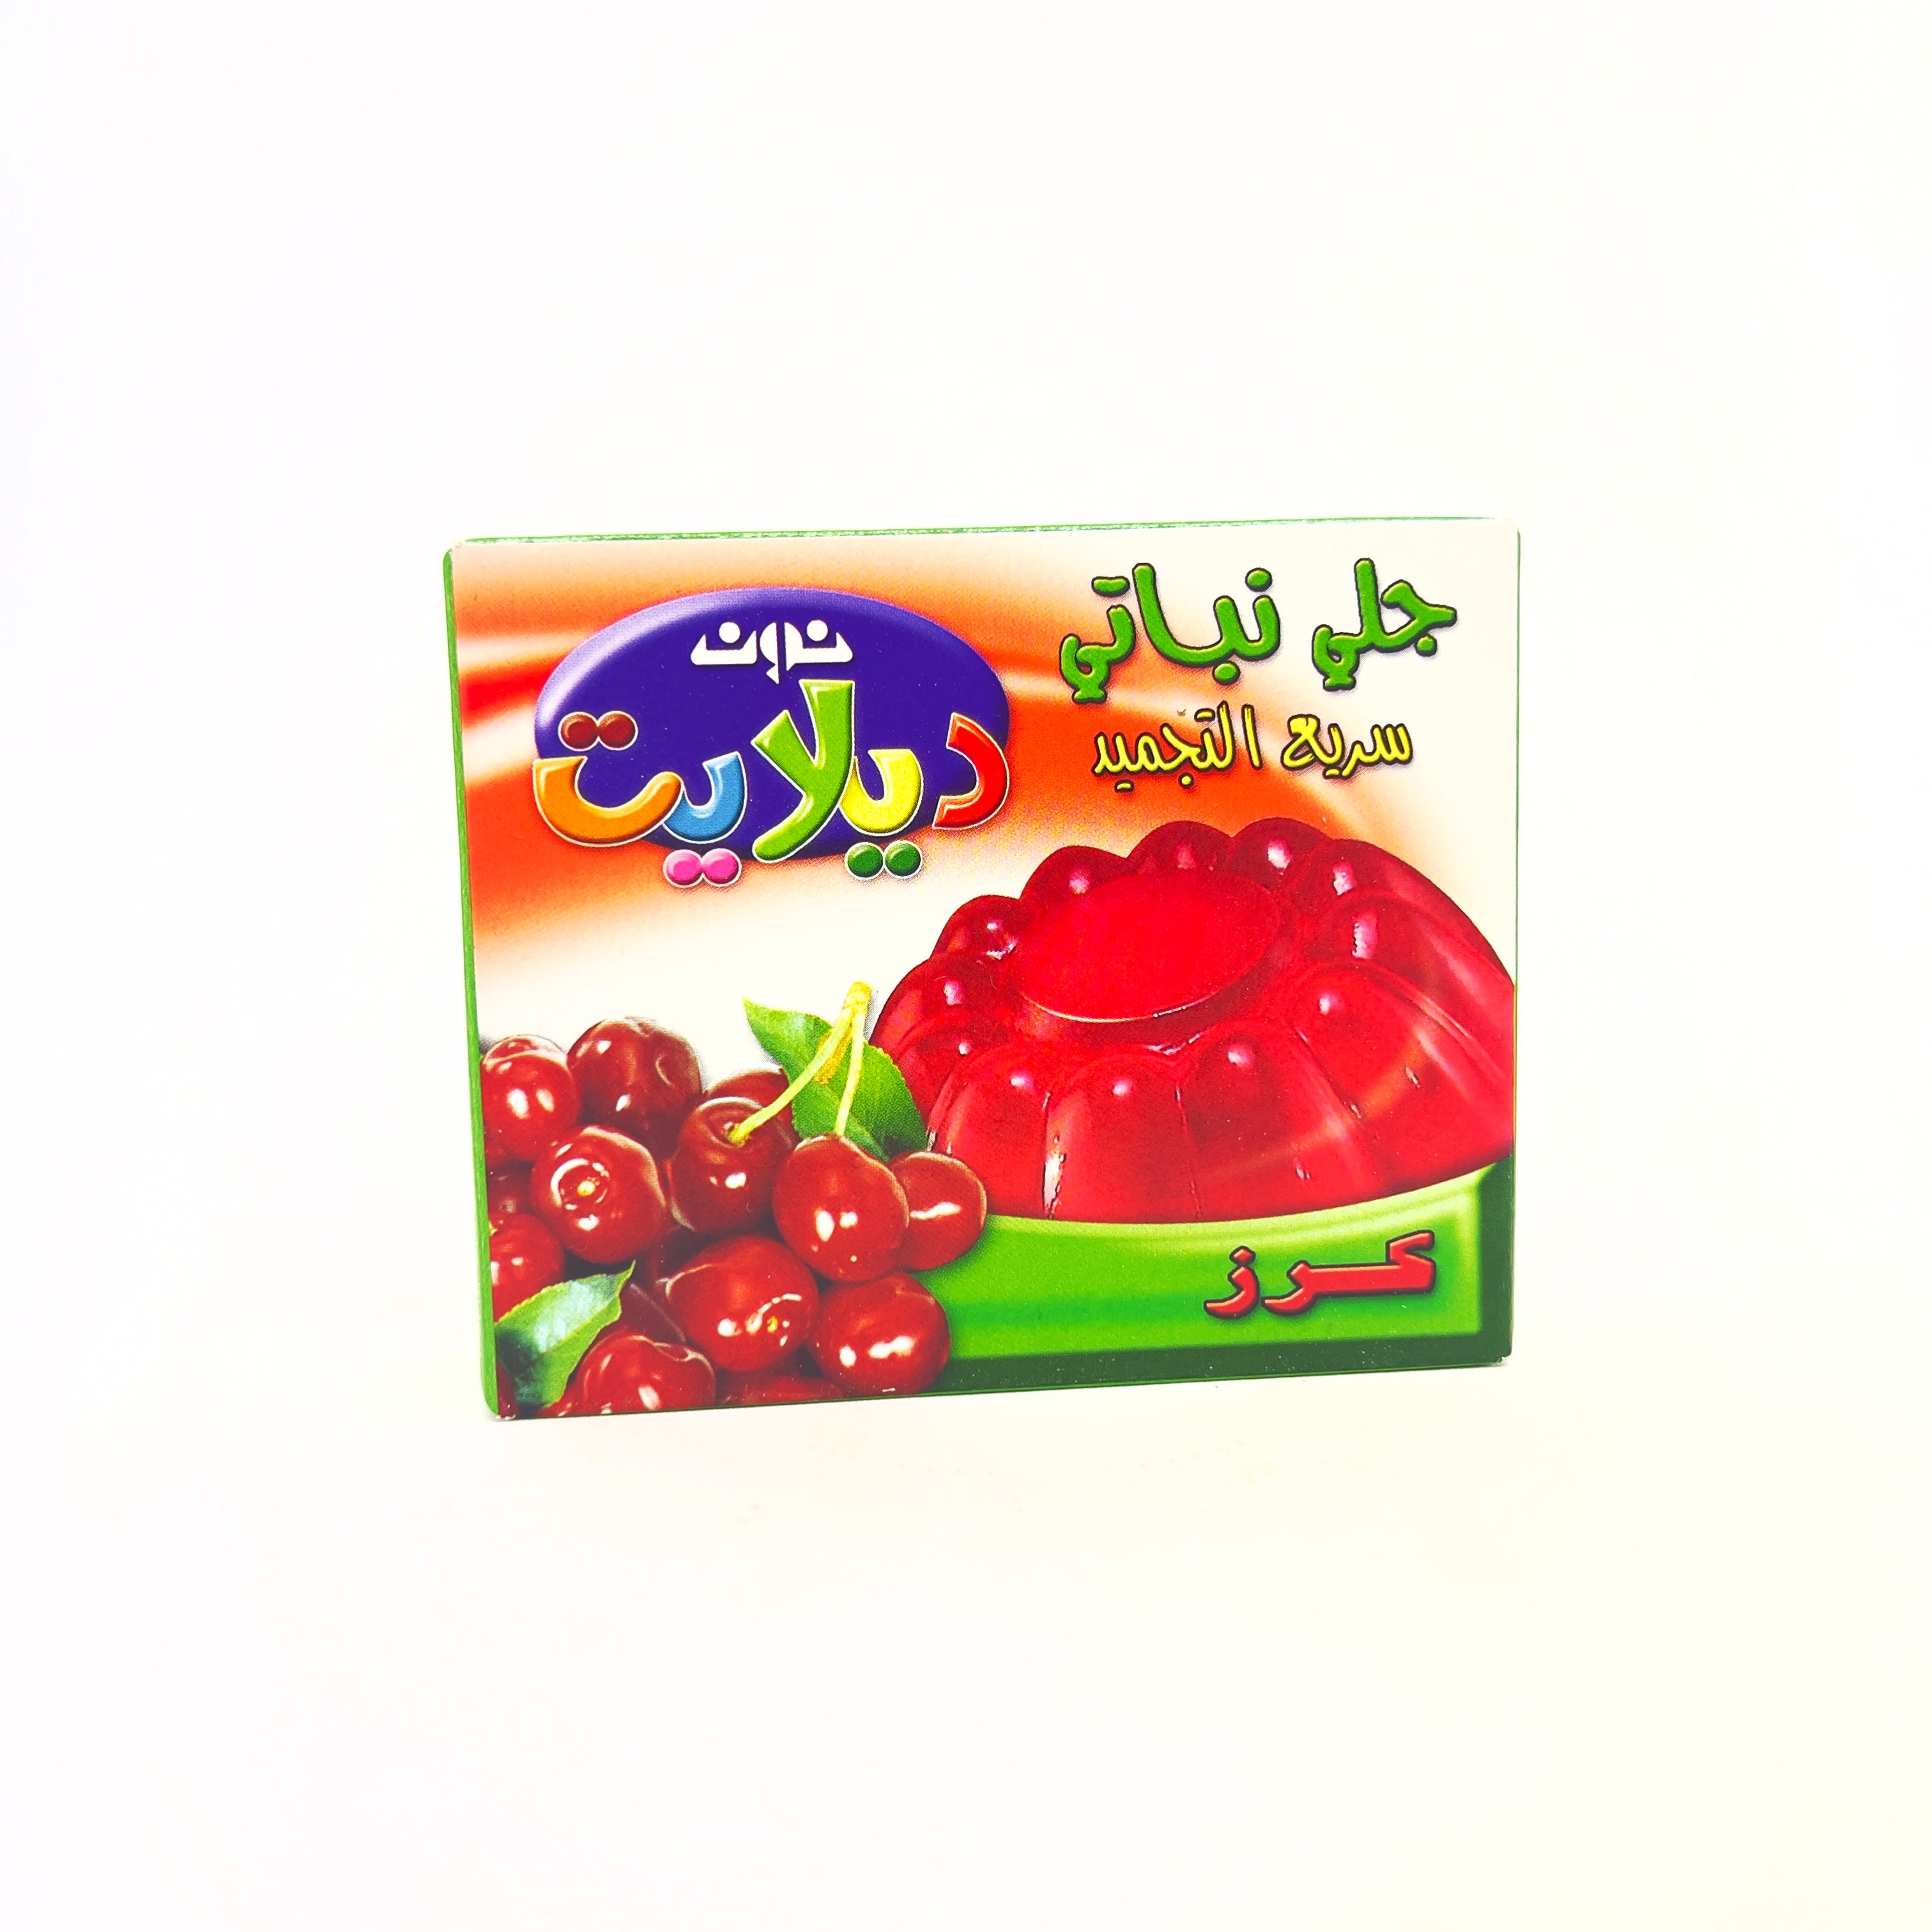 DELIGHT Raspberry Jelly 85g